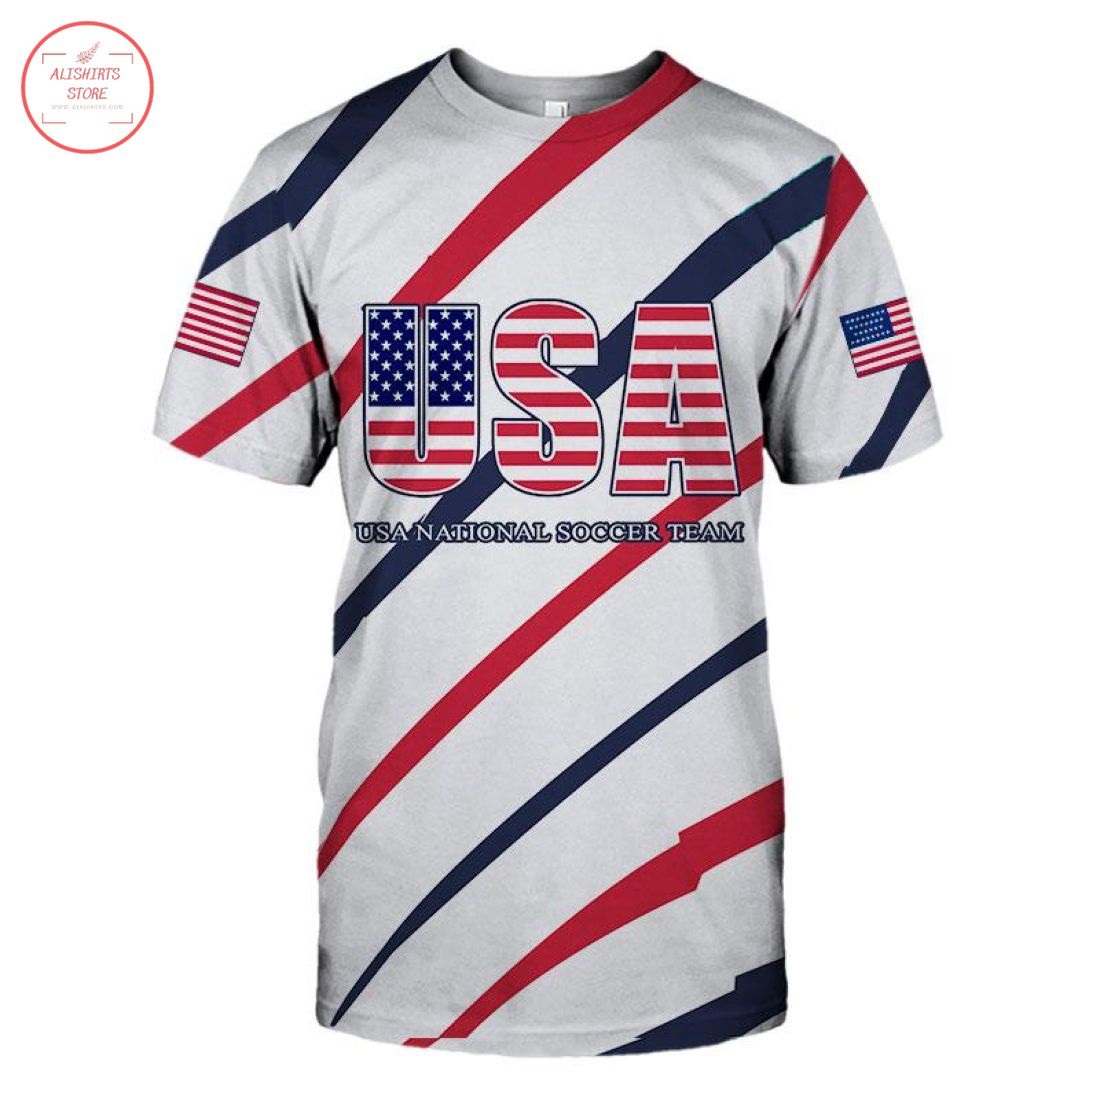 USA National Soccer Team Shirt